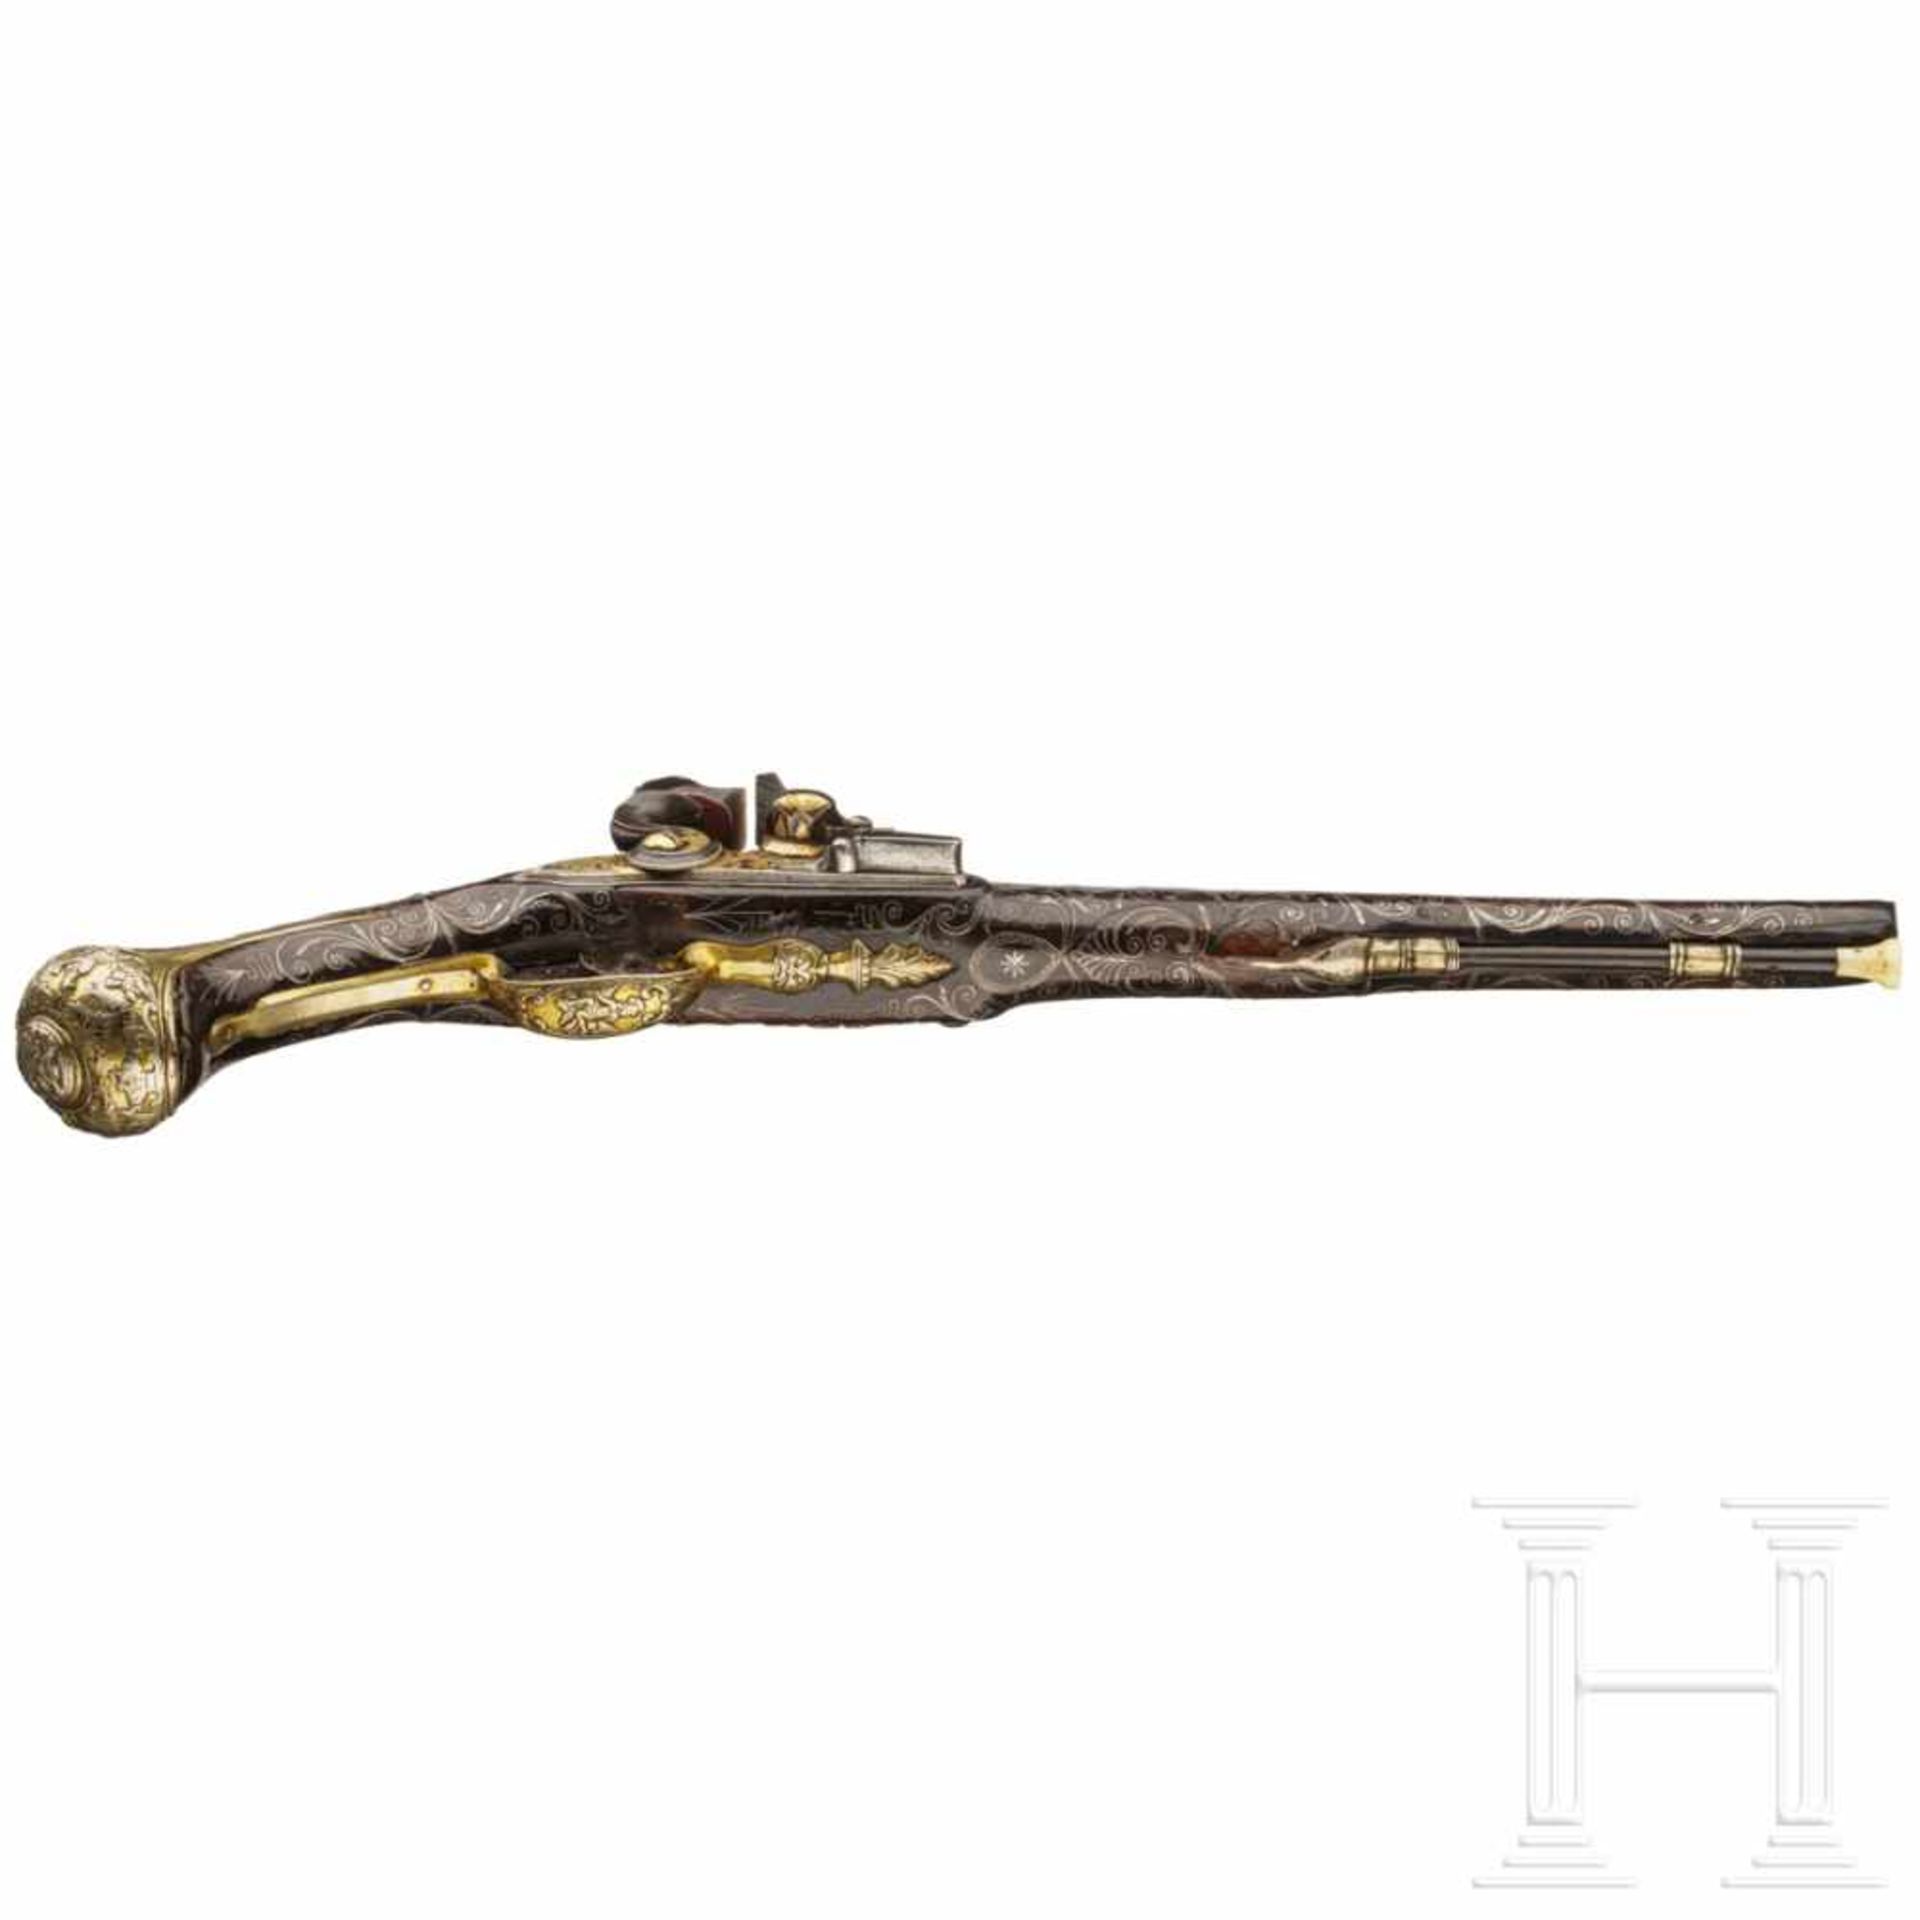 An Ottoman gold-damascened flintlock pistol (Kubur), circa 1800Octagonal to round barrel with smooth - Bild 4 aus 6